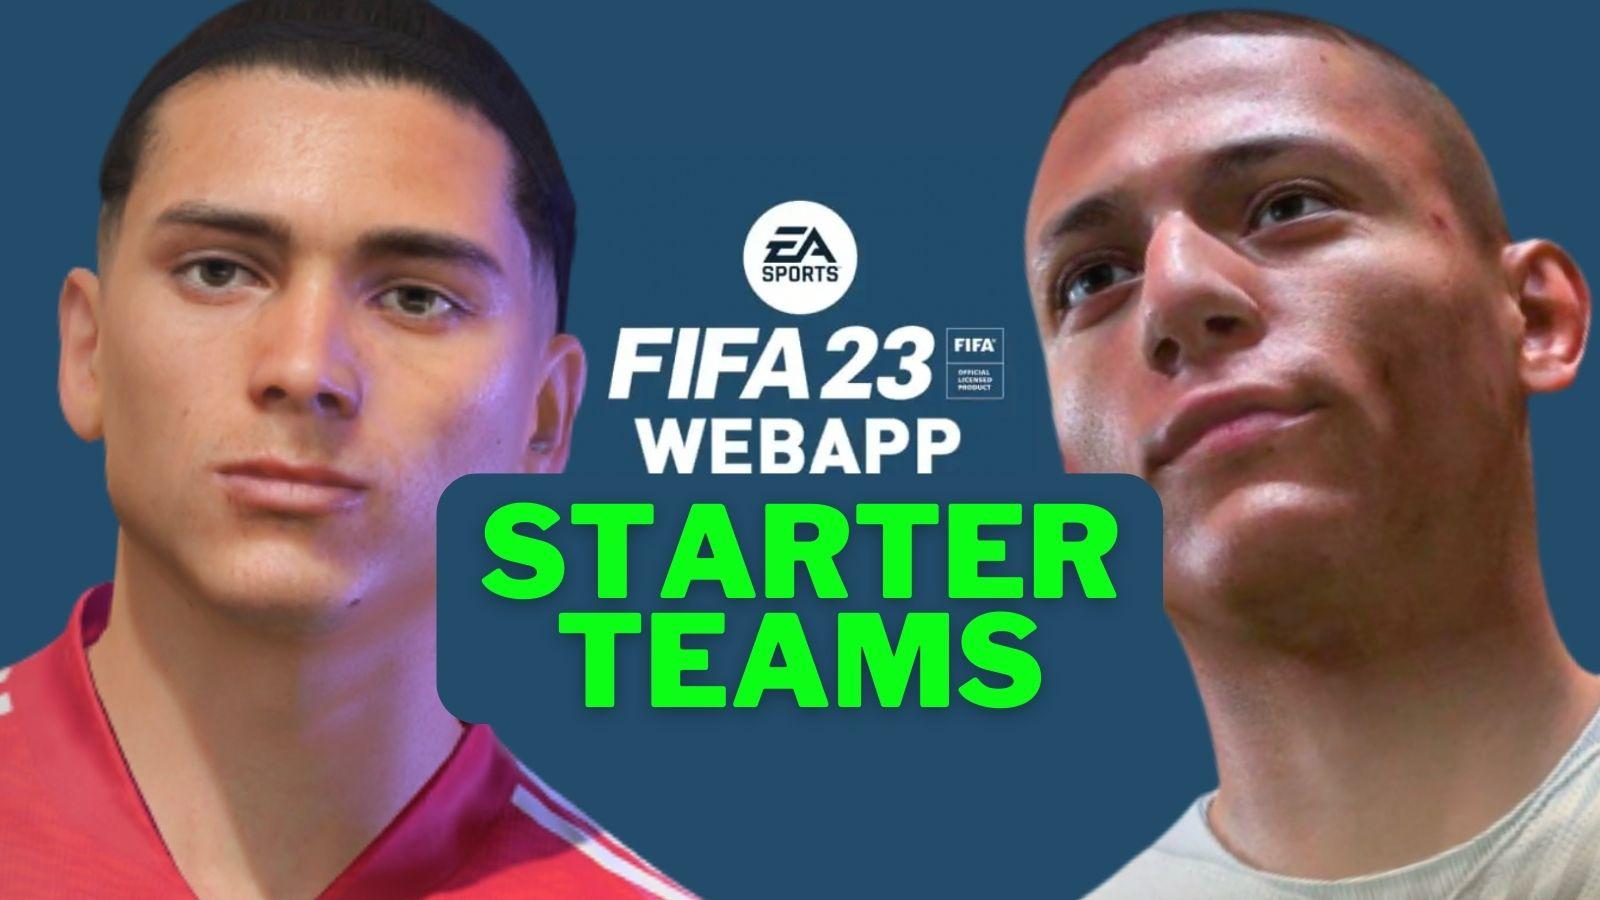 Best FIFA 23 starter teams for Web App & early access on 10k-50k